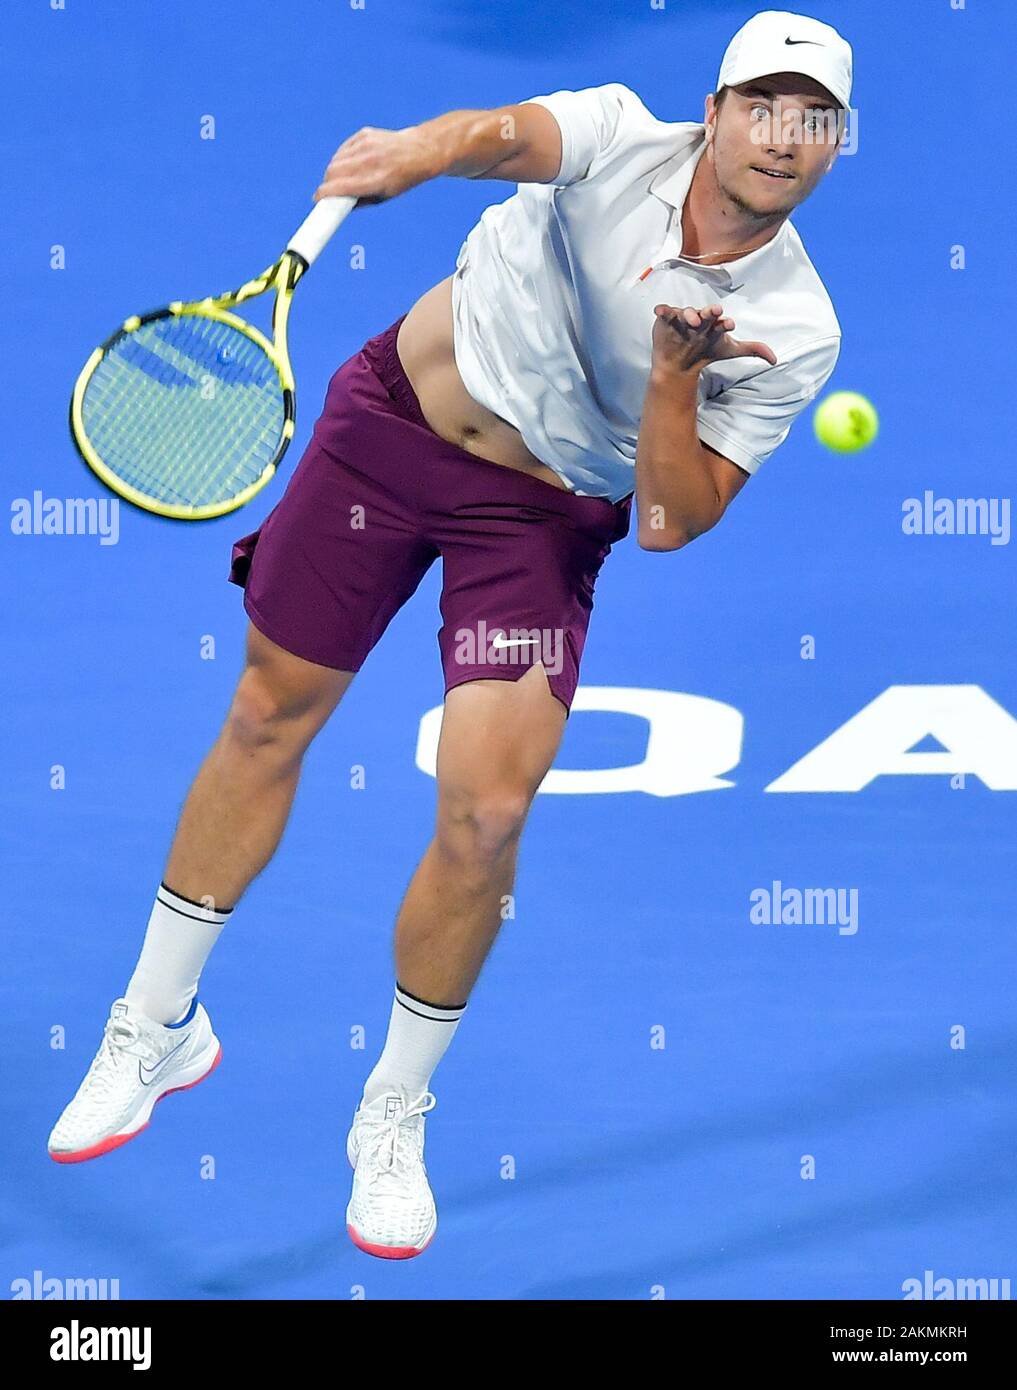 Doha, Qatar. 9th Jan, 2020. Miomir Kecmanovic of Serbia serves during the singles quarterfinal match against Marton Fucsovics of Hungary at ATP Qatar Open tennis tournament in Doha, Qatar, Jan. 9, 2020. Credit: Nikku/Xinhua/Alamy Live News Stock Photo